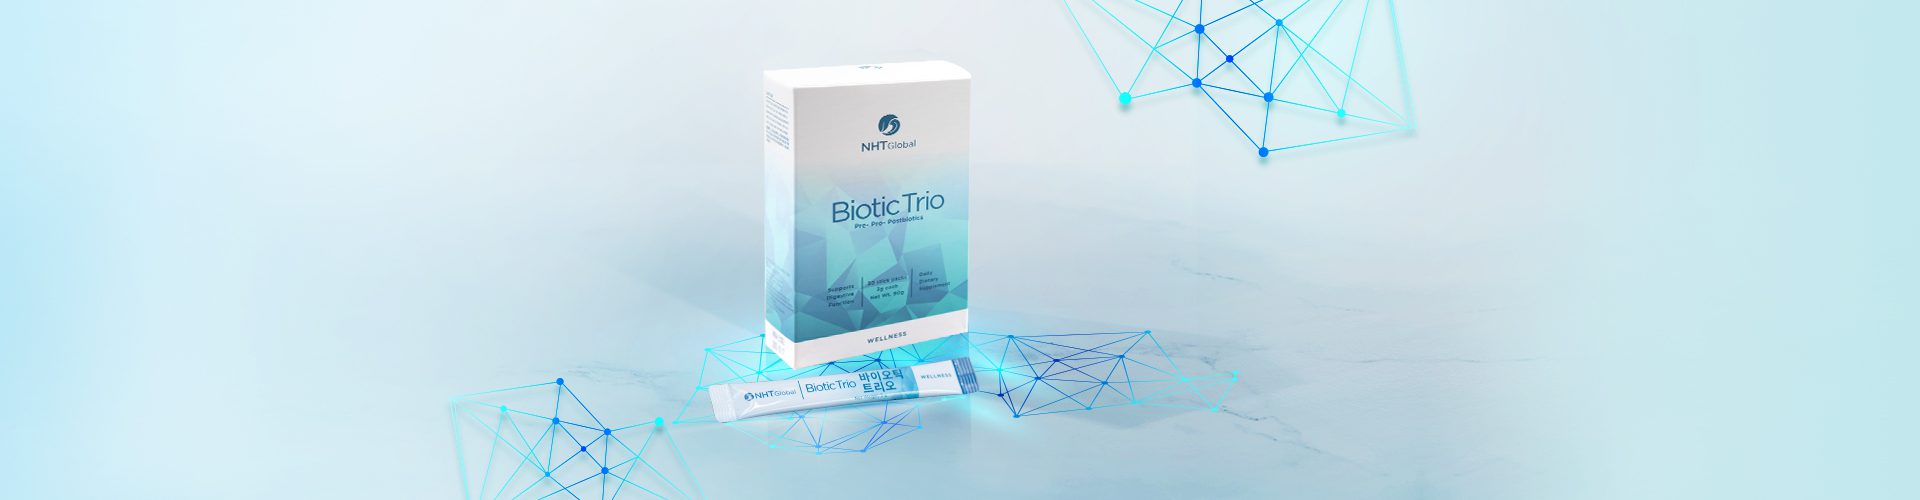 Biotic Trio_banner_website_2000x500